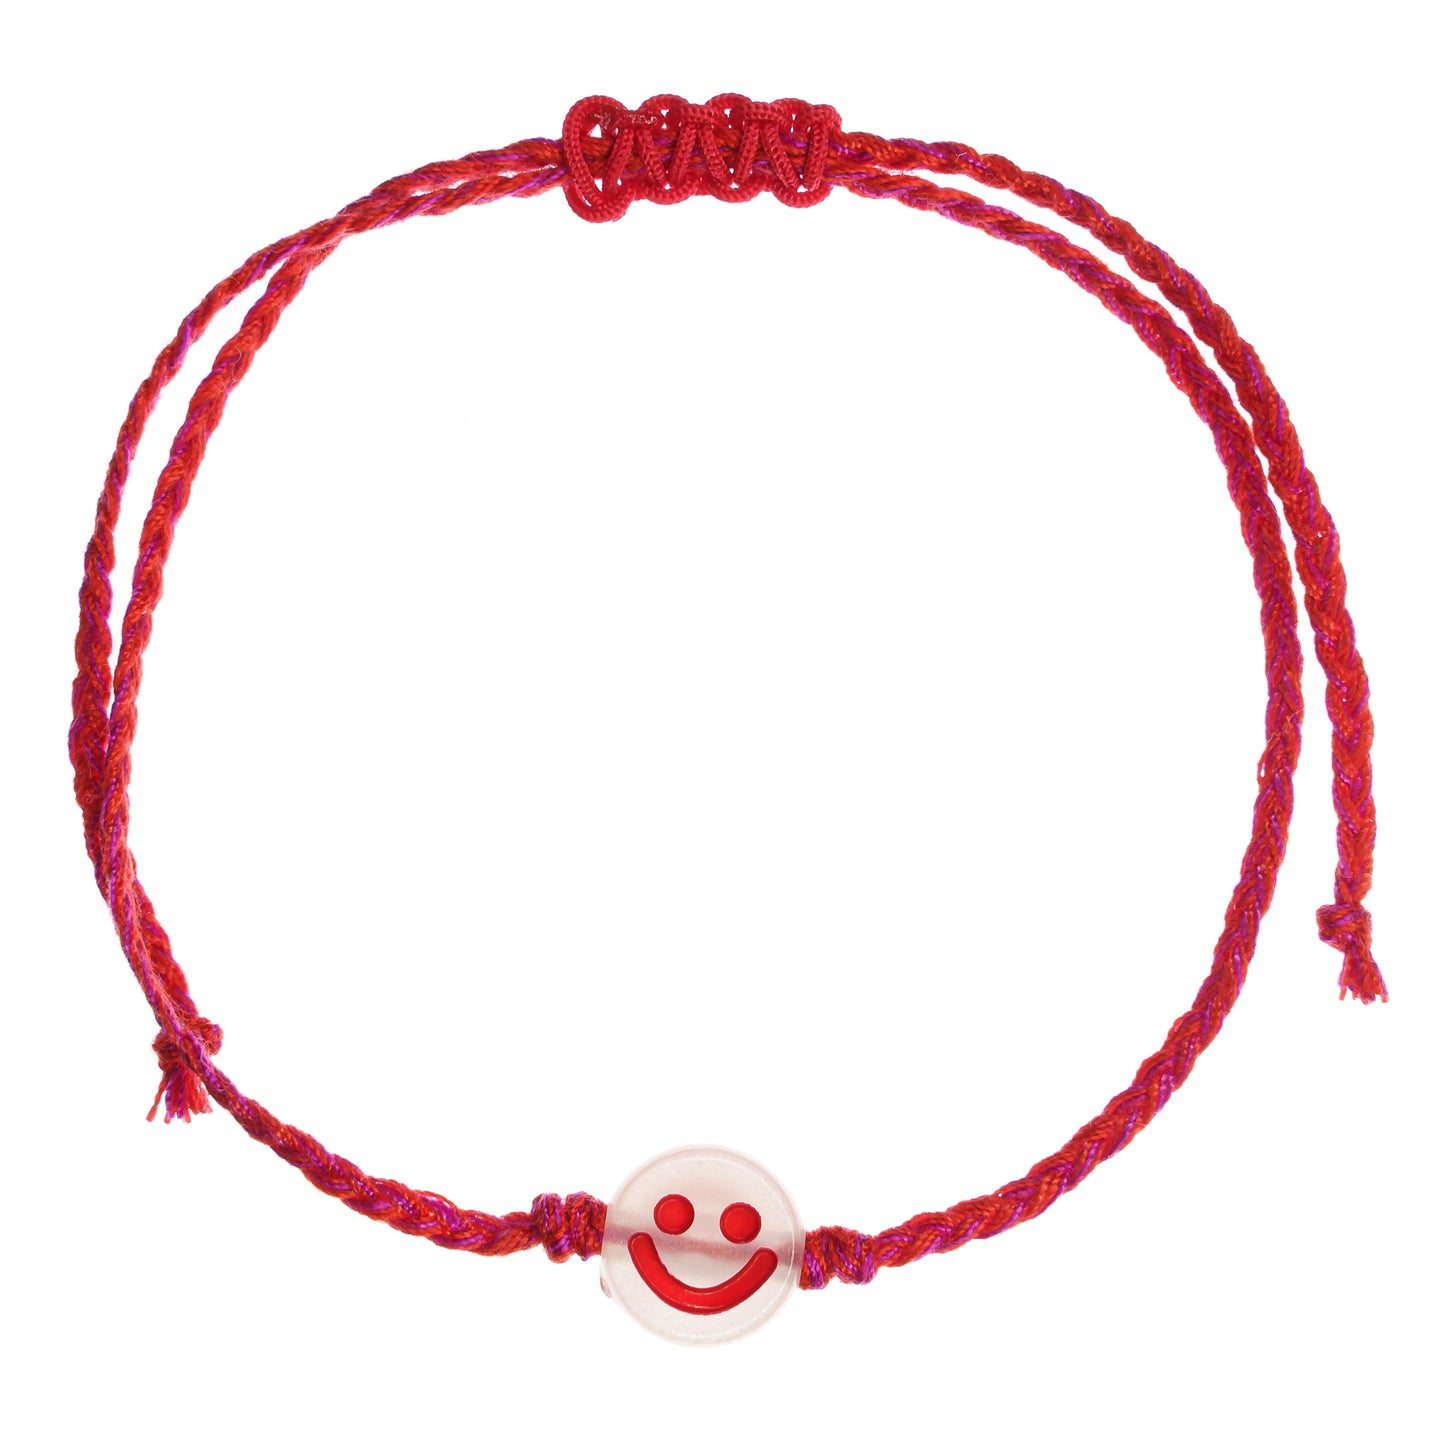 Smiley Face String Bracelet